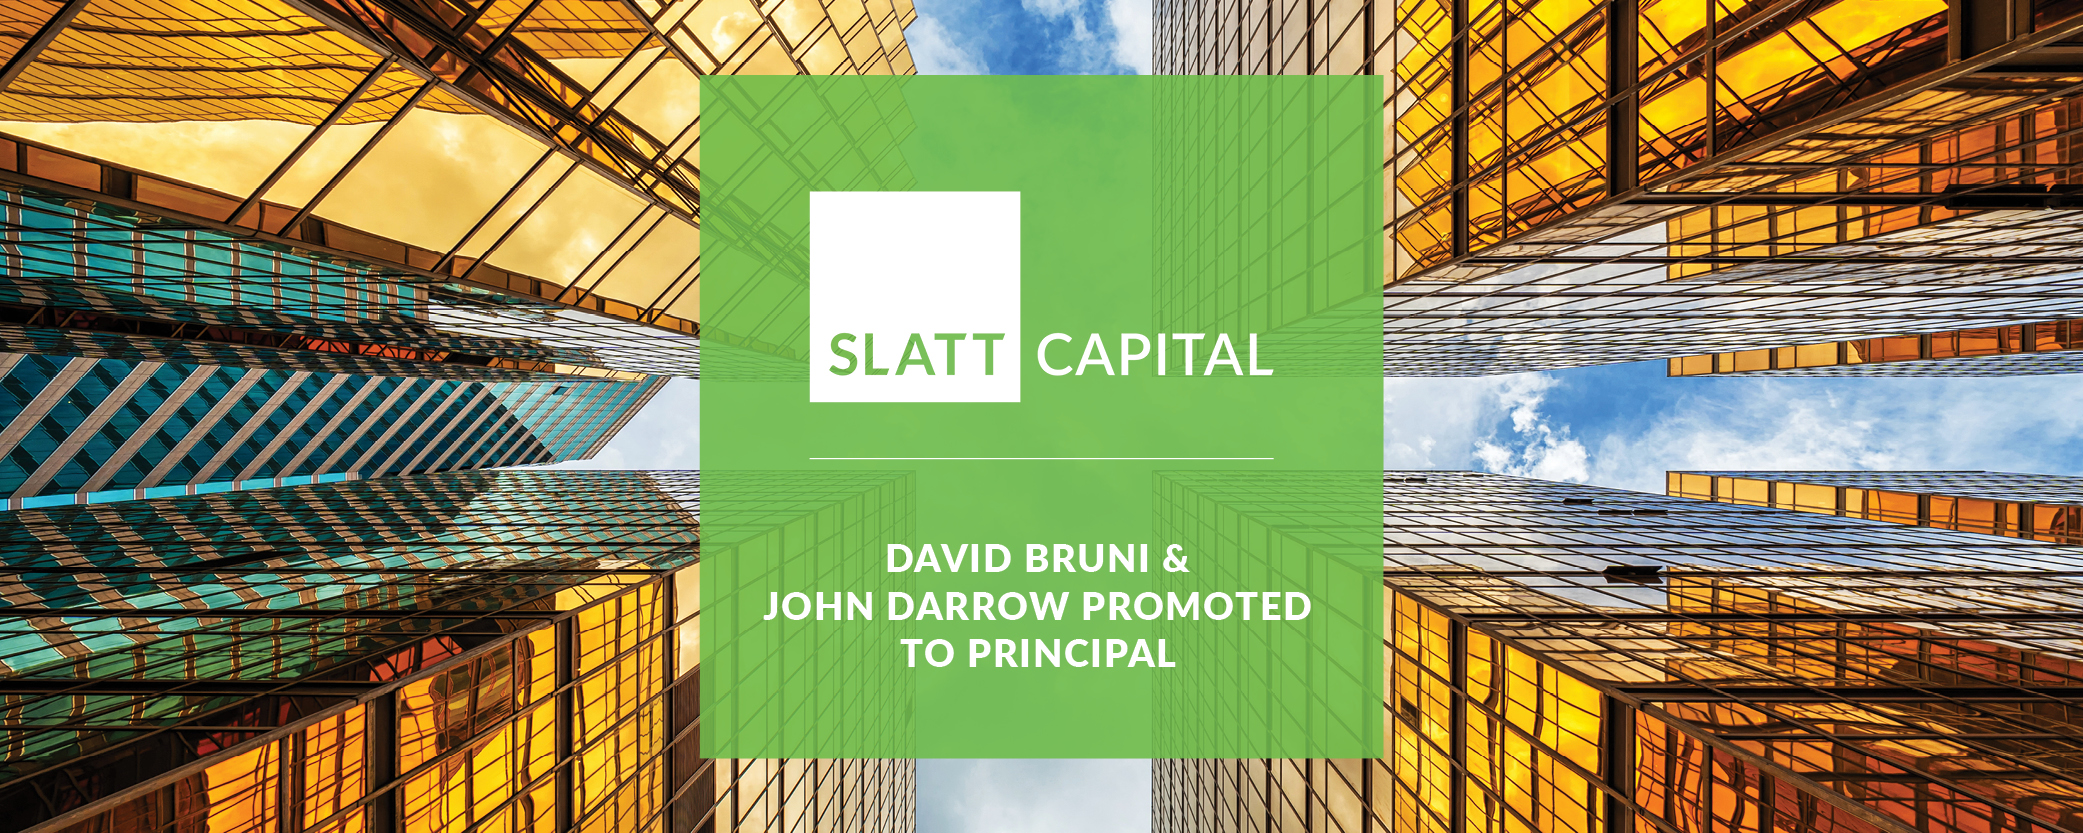 Slatt capital announces promotion of david bruni and john darrow to principal